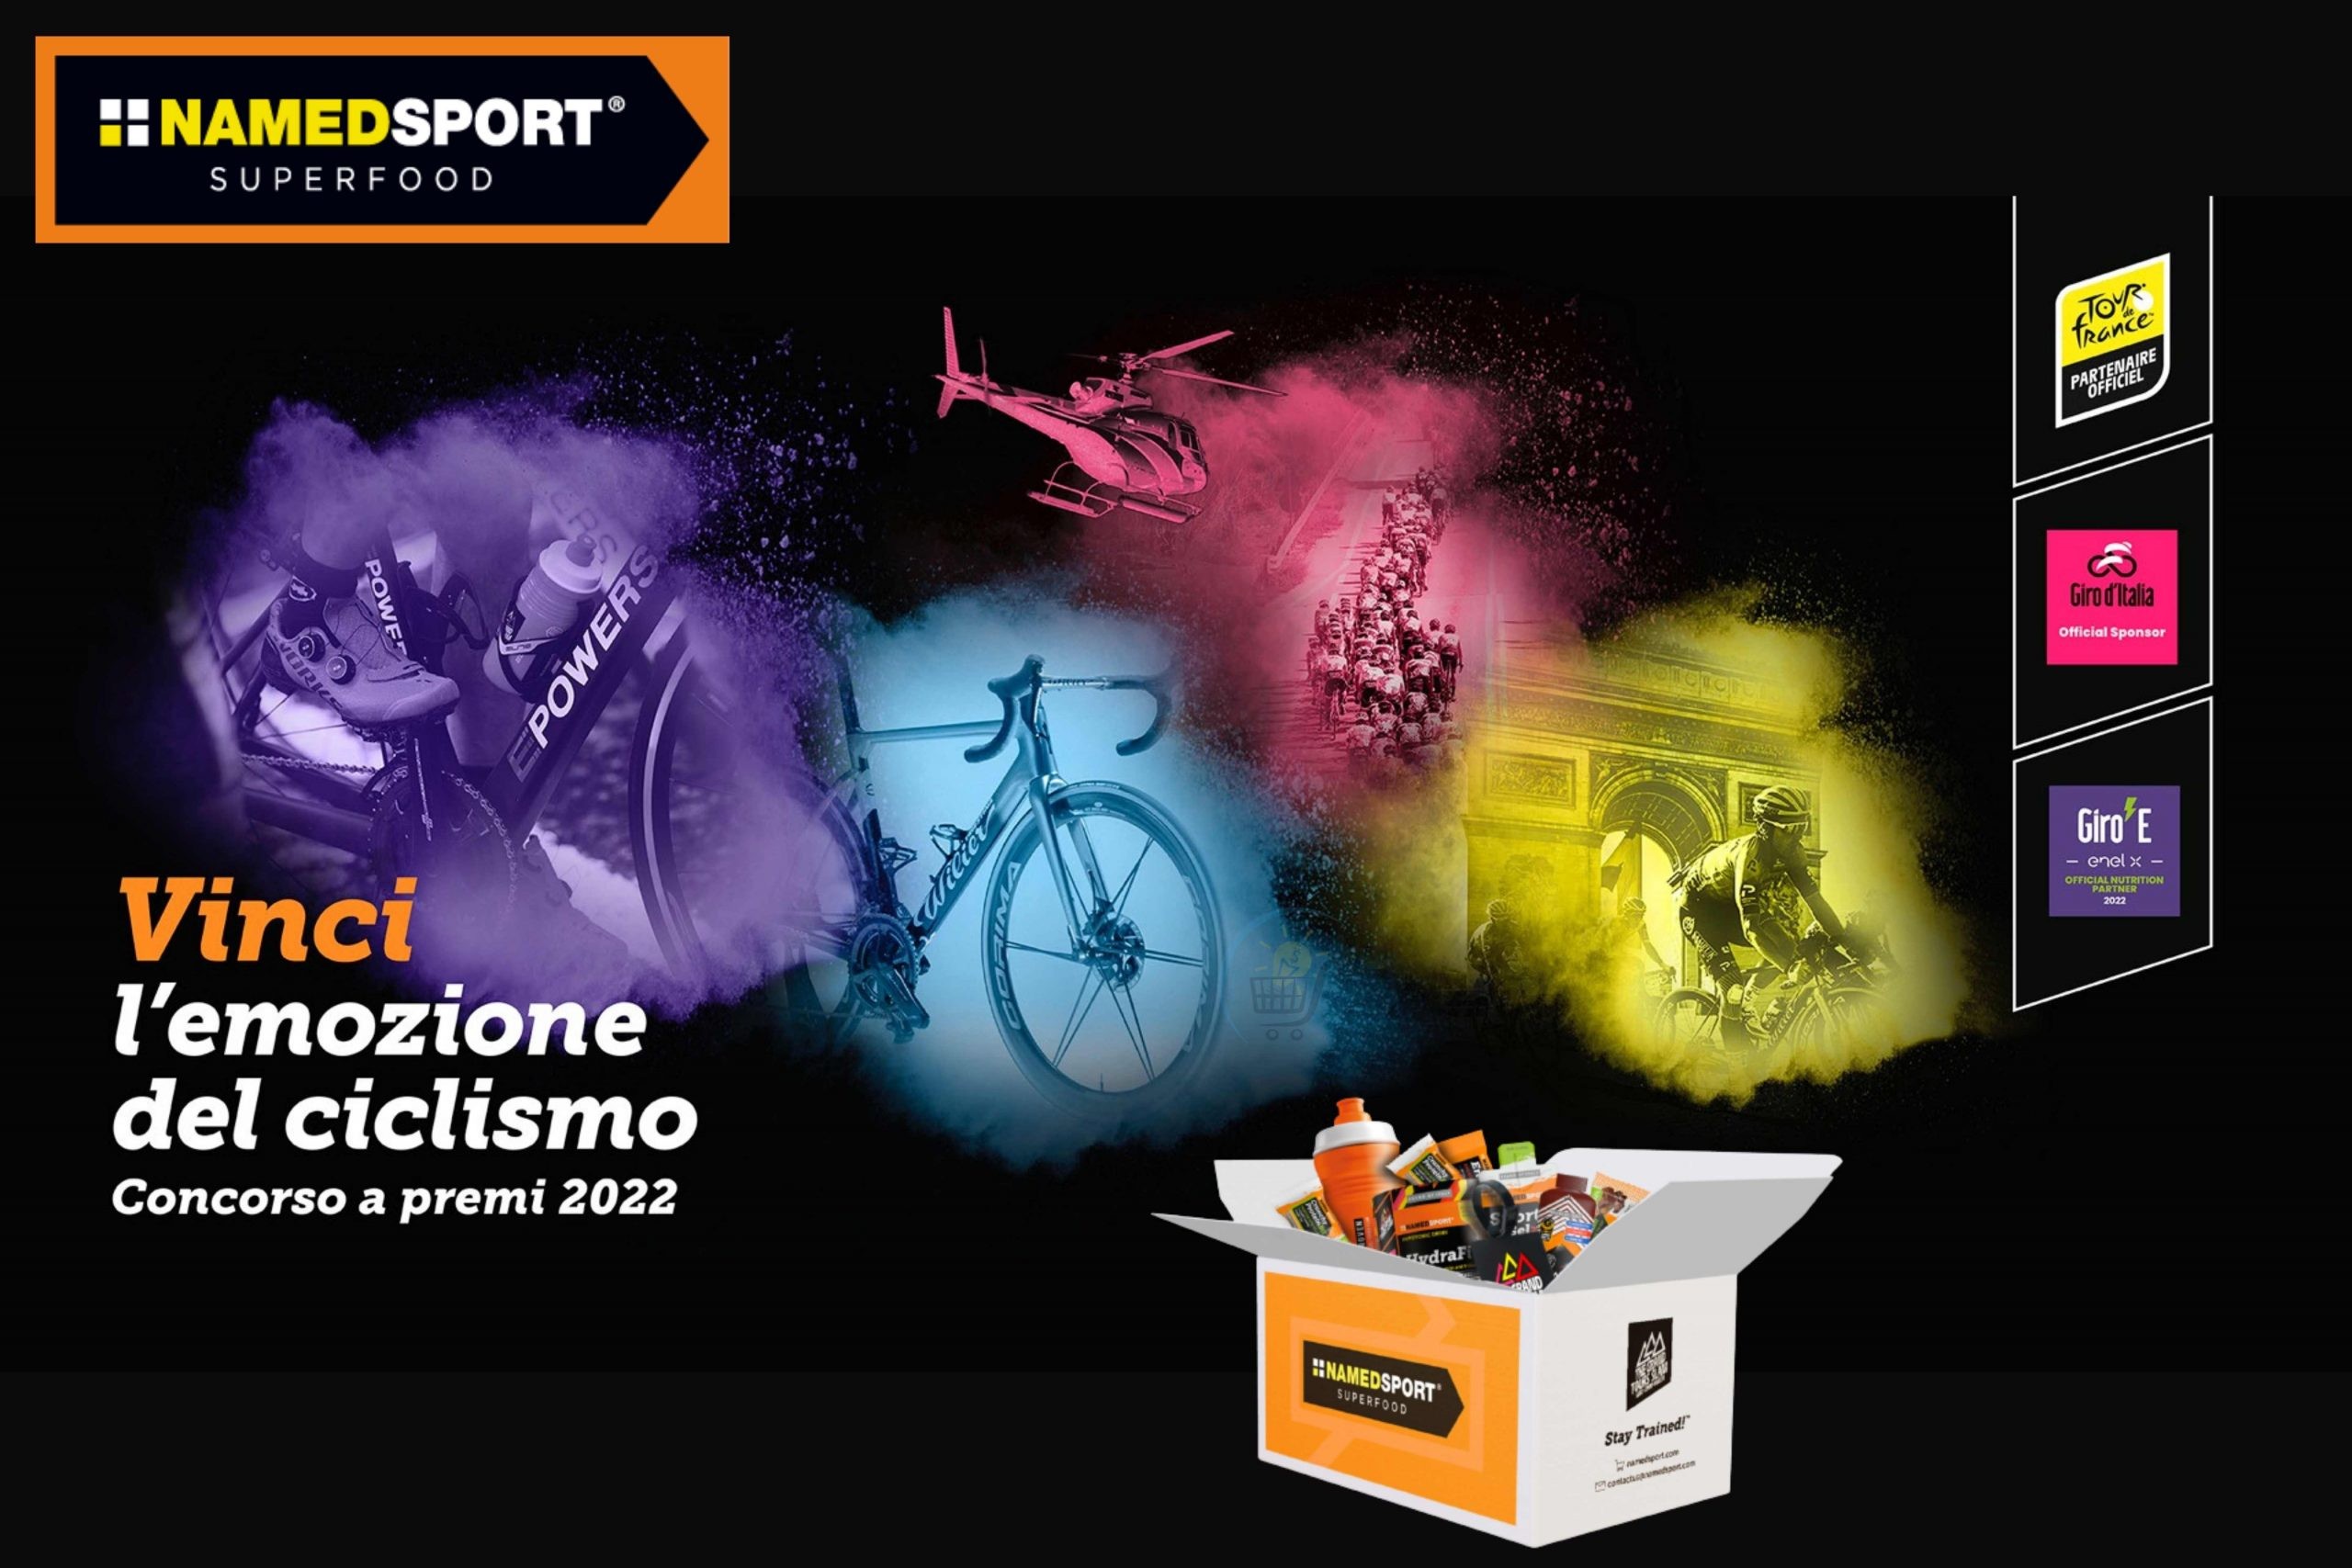 Concorso NamedSport “Vivi l’emozione del ciclismo”: come vincere kit Namedsport, bici da corsa, weekend a Parigi e molto altro